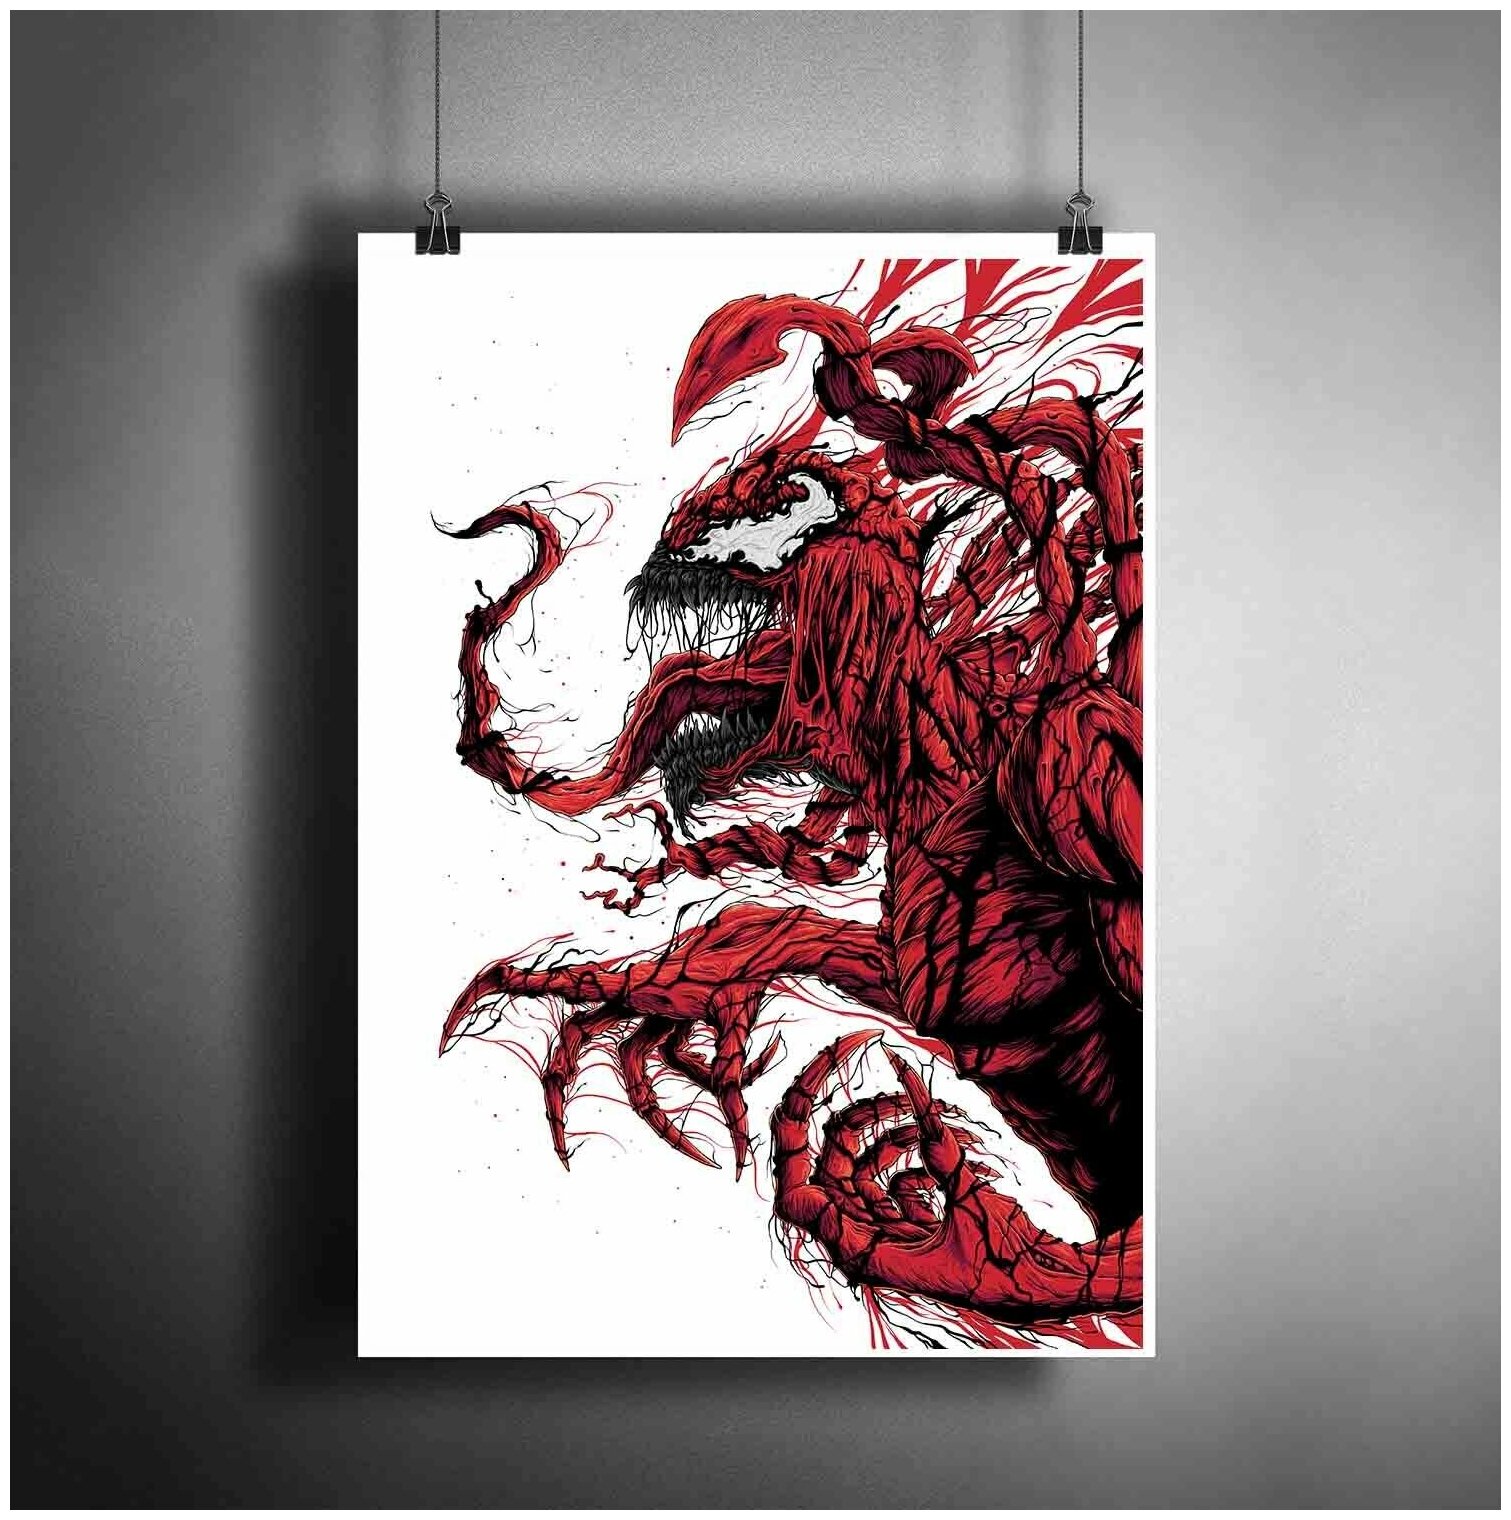 Постер плакат для интерьера "Веном. The Venom. Фильм"/ Декор дома, офиса. A3 (297 x 420 мм)